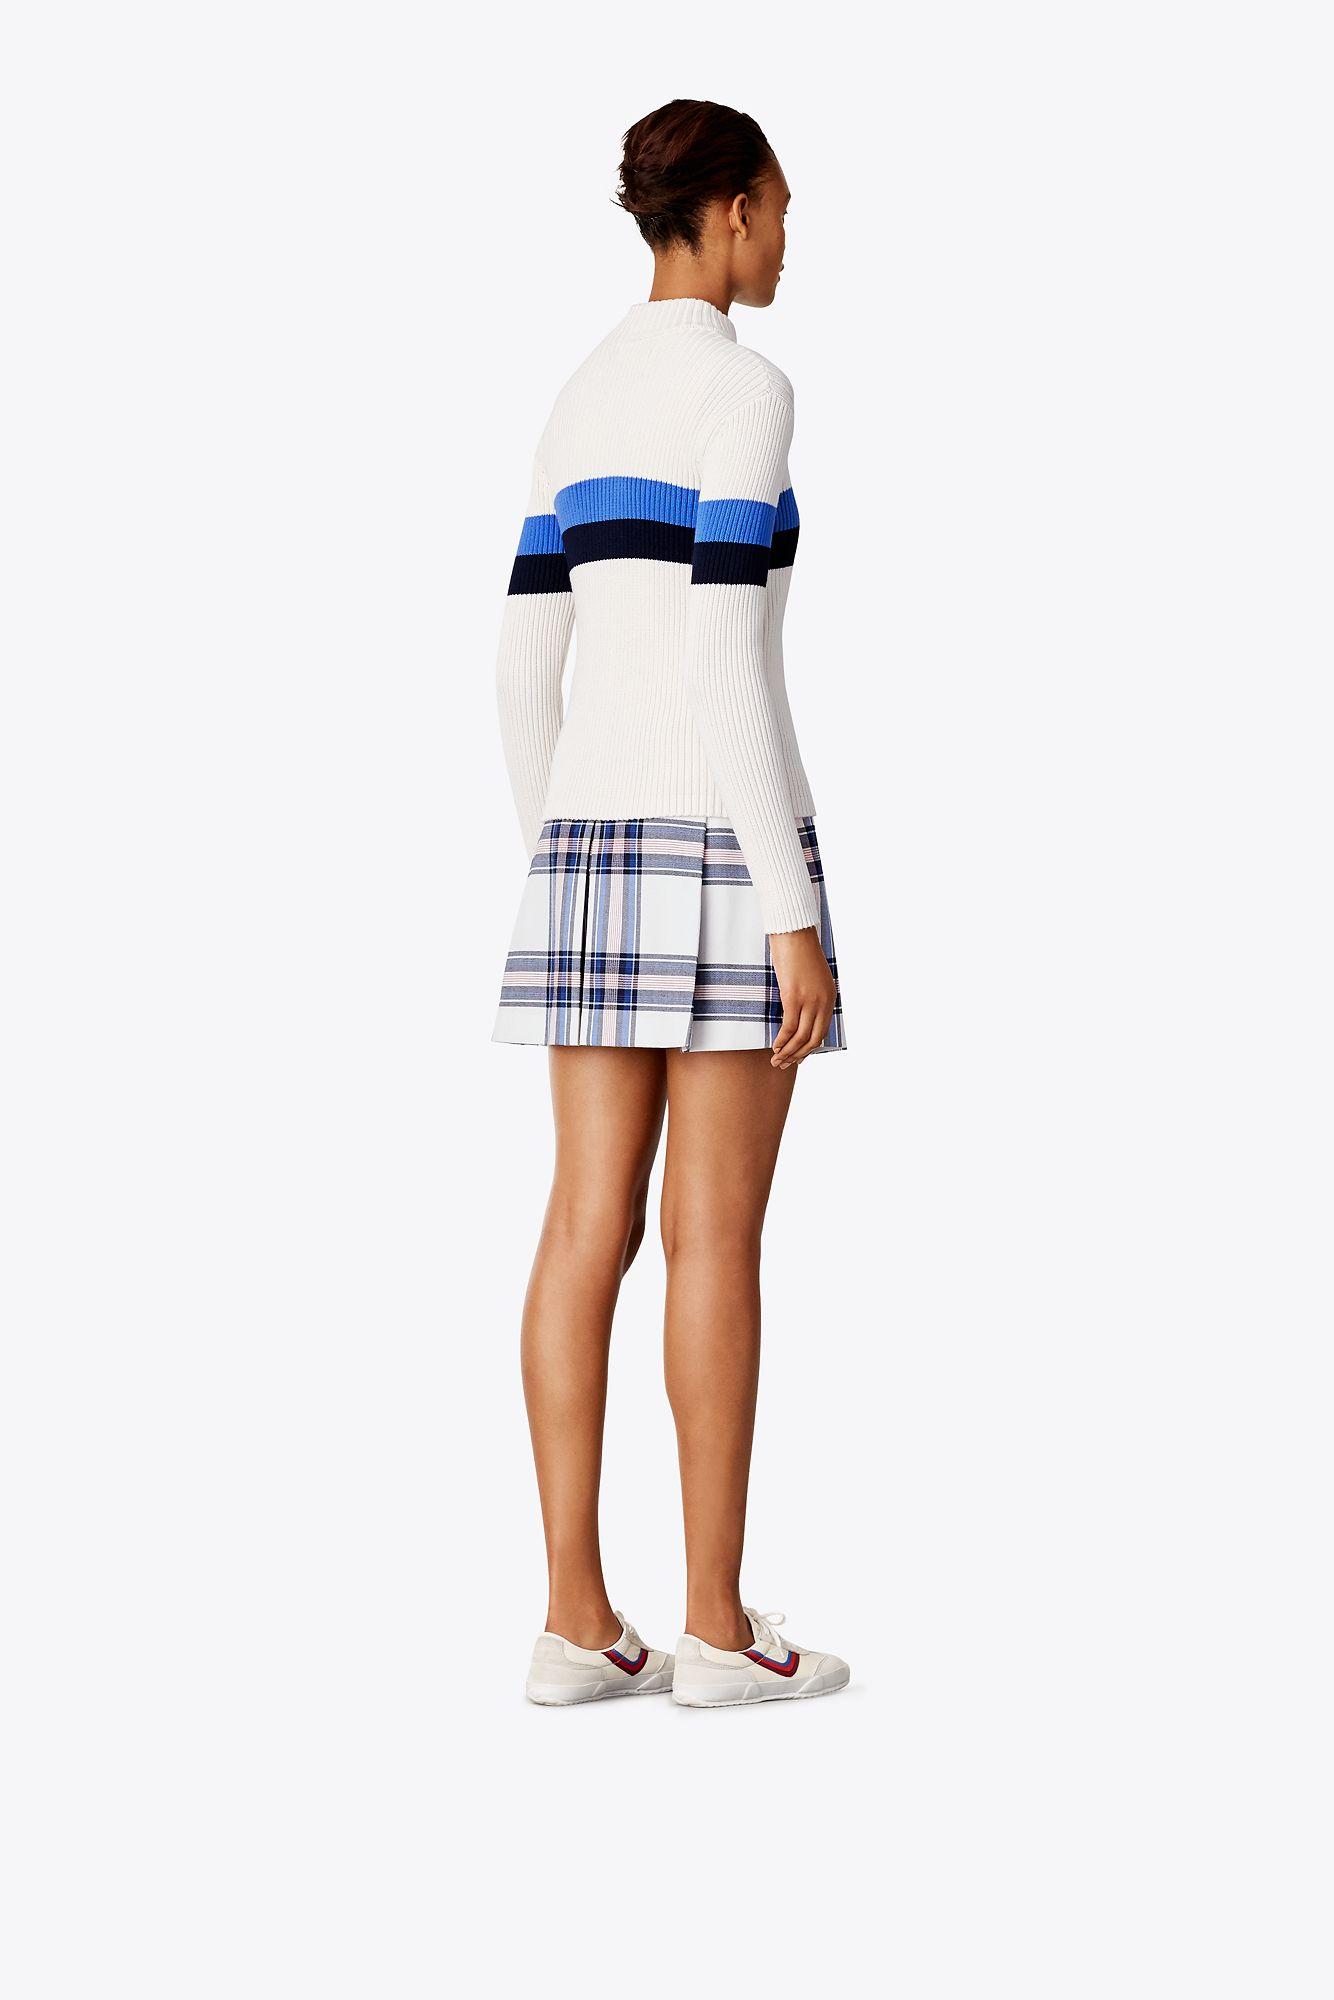 Tory Sport Wool Performance Plaid Golf Skirt in White - Lyst